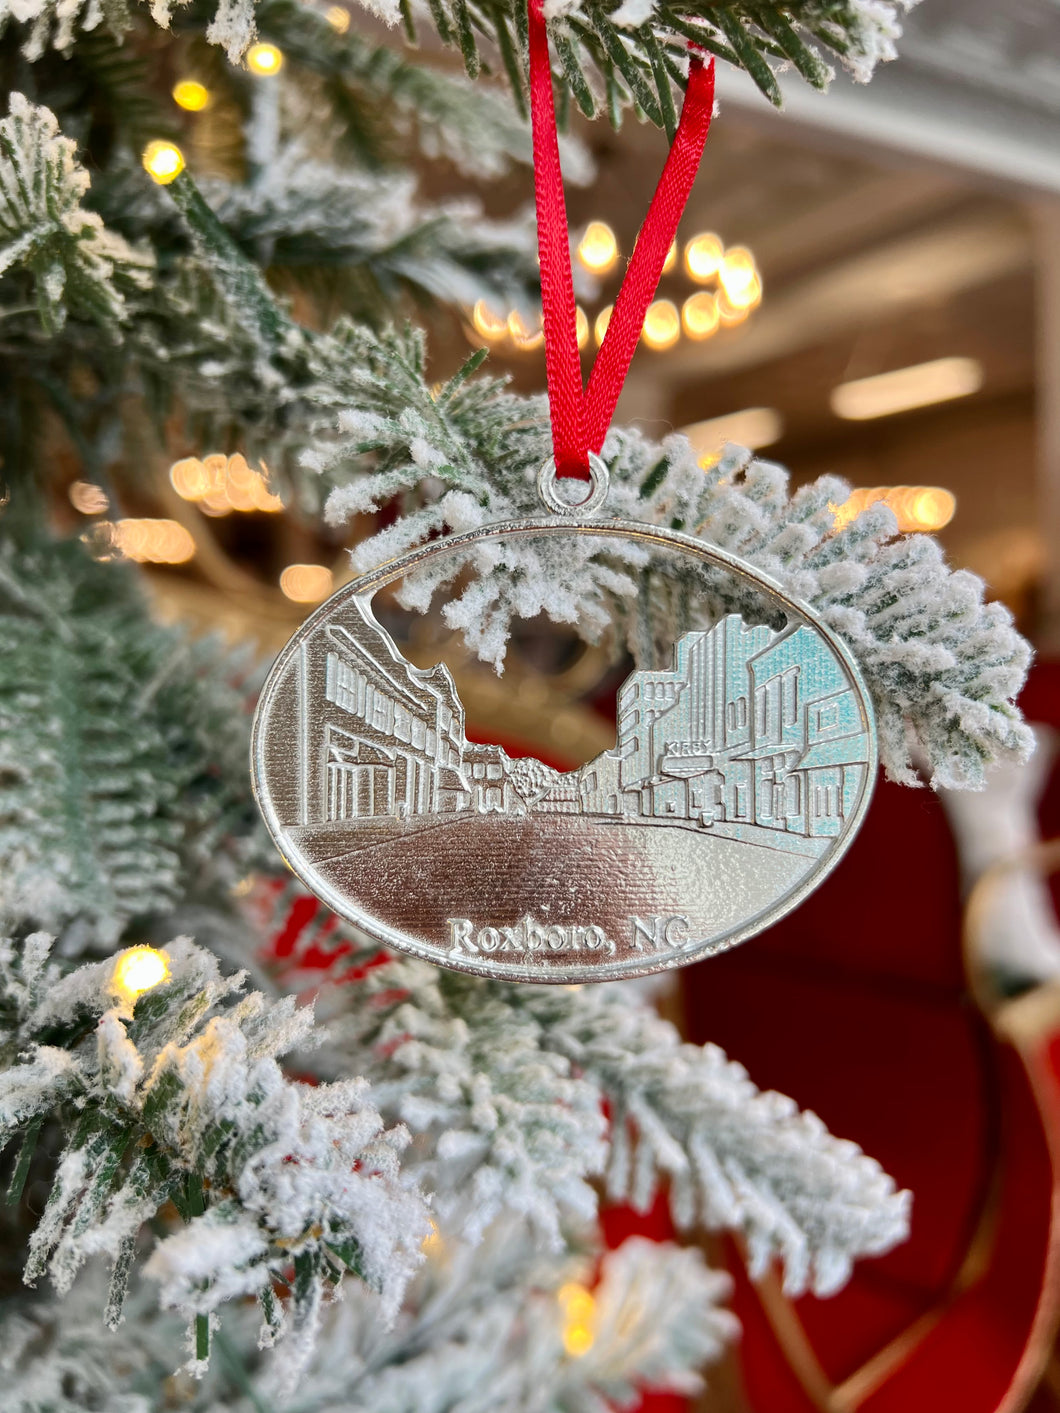 Roxboro Christmas Ornament 2022